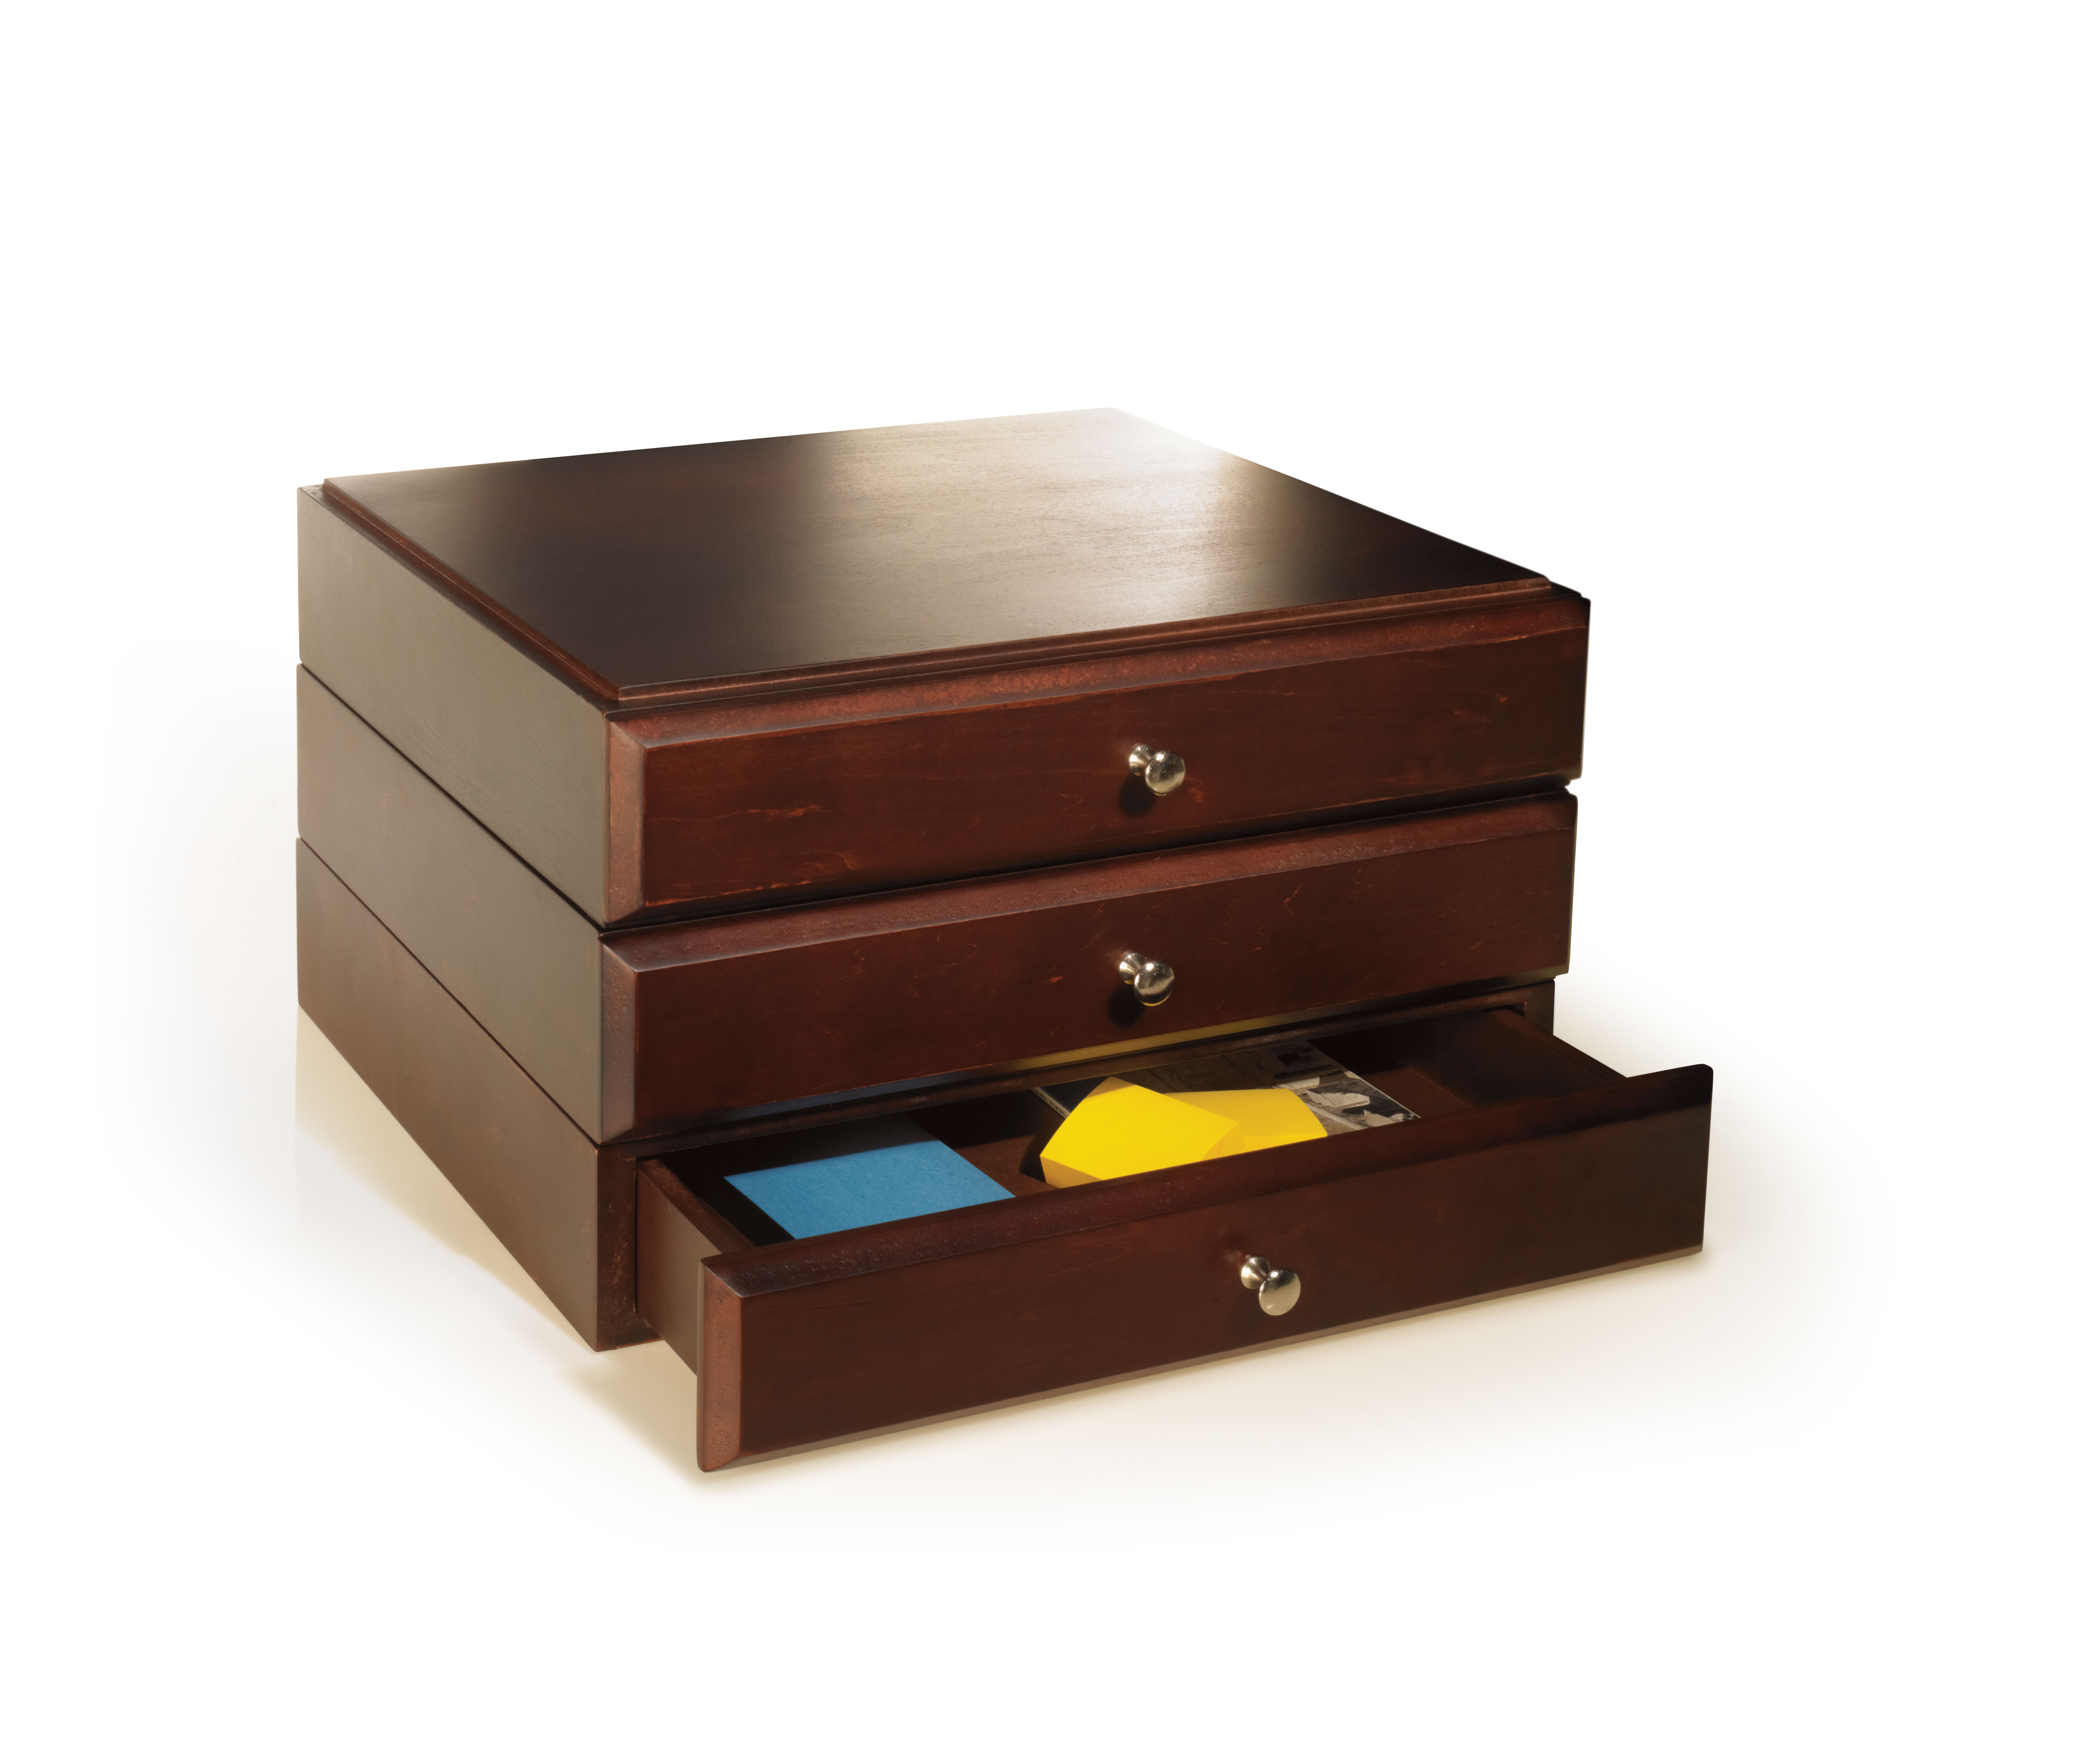 Stackable Wooden Desk Organizer Kit with 4 Drawers - Bindertek